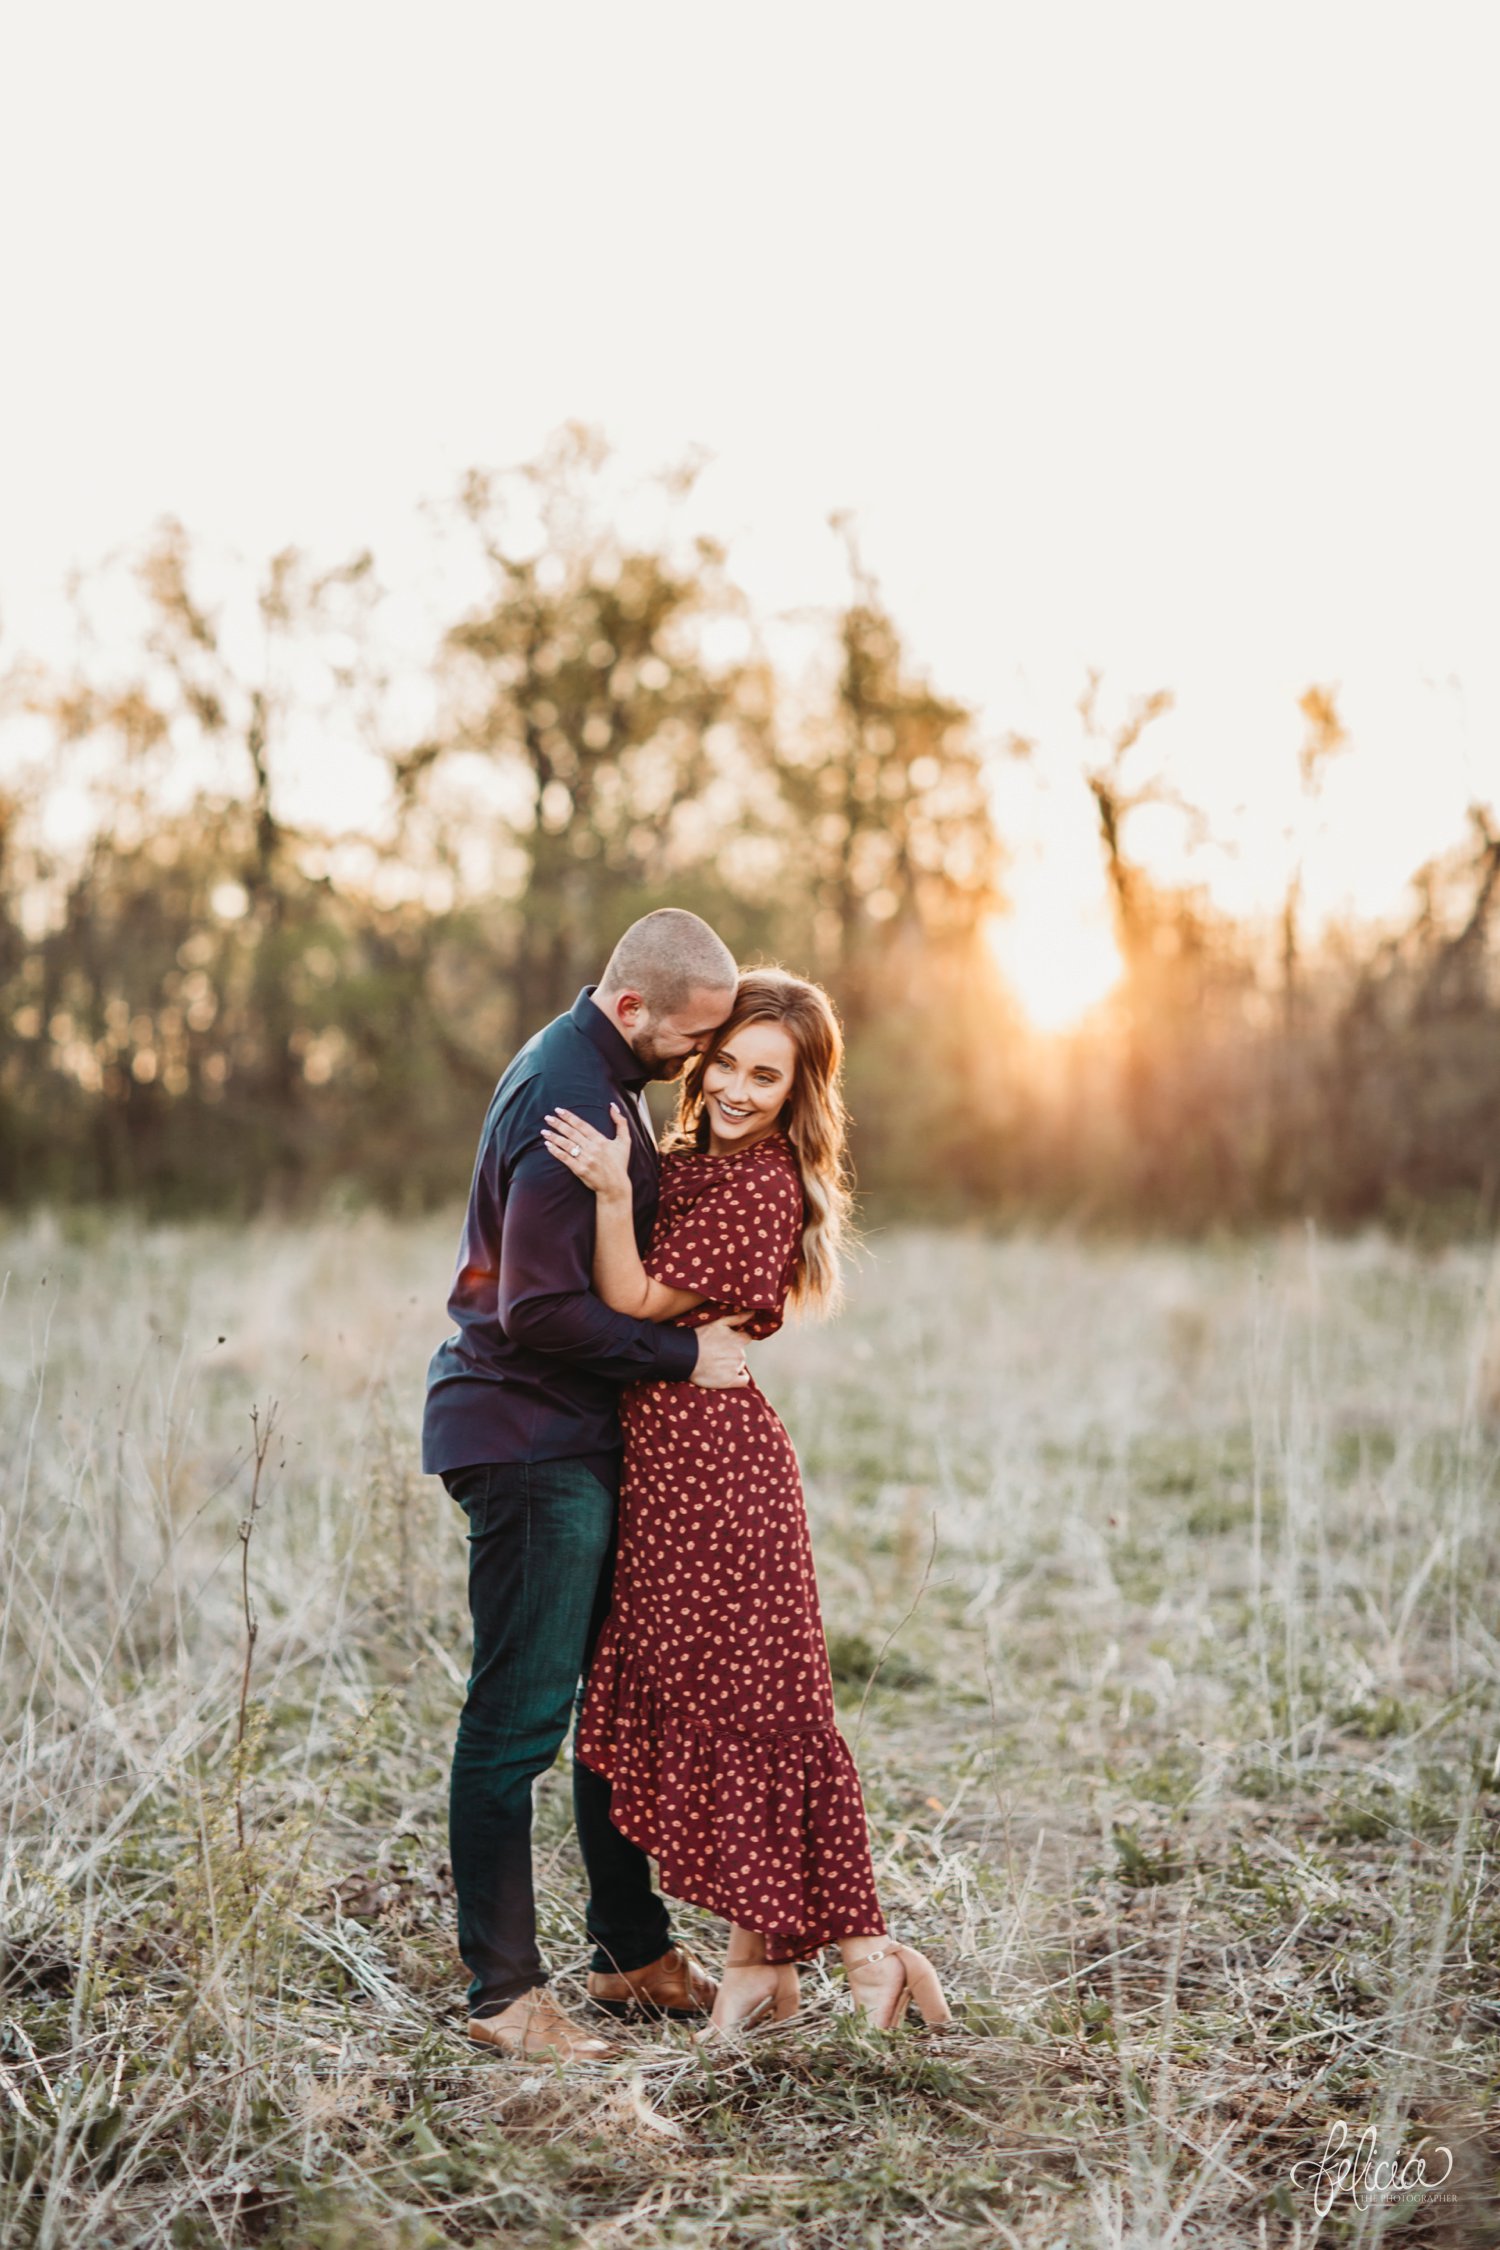 images by feliciathephotographer.com | Burr Oak Woods | engagement photos | wedding photographer | engagement photographer | field | sunrise | posed | posing | hug | laughter | love | smile | sunlight | red dress | blue jeans | polka dots | 